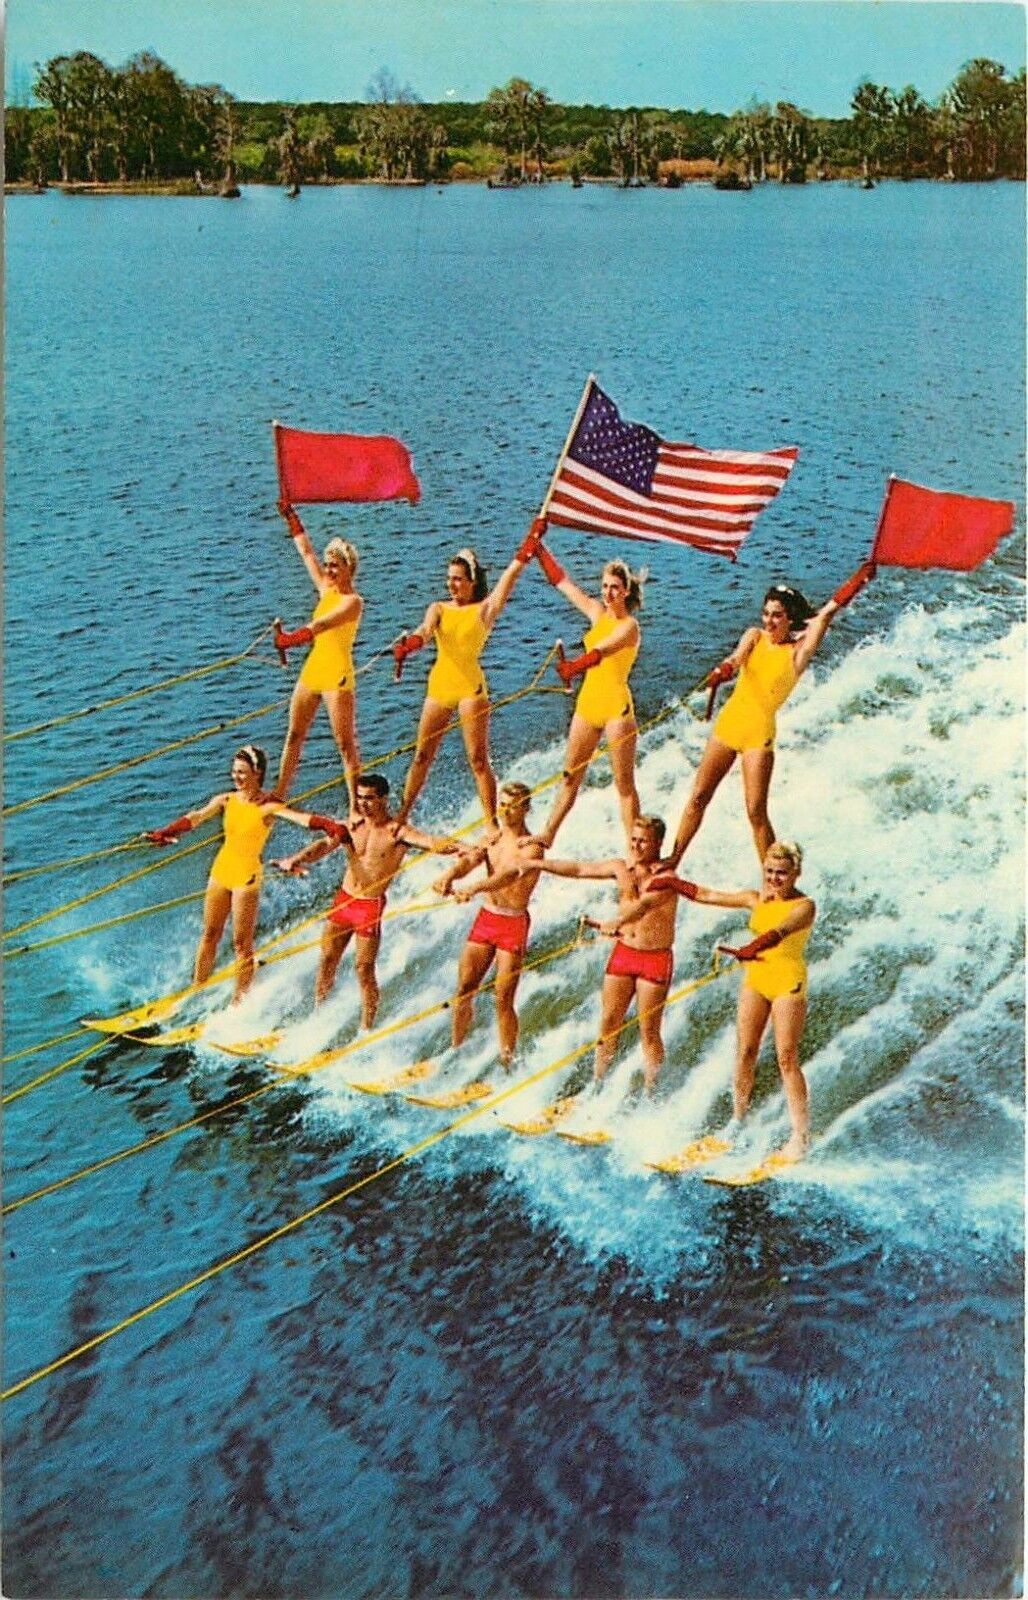 Human Pyramid on Water Skis Cypress Gardens Florida American Flag Postcard